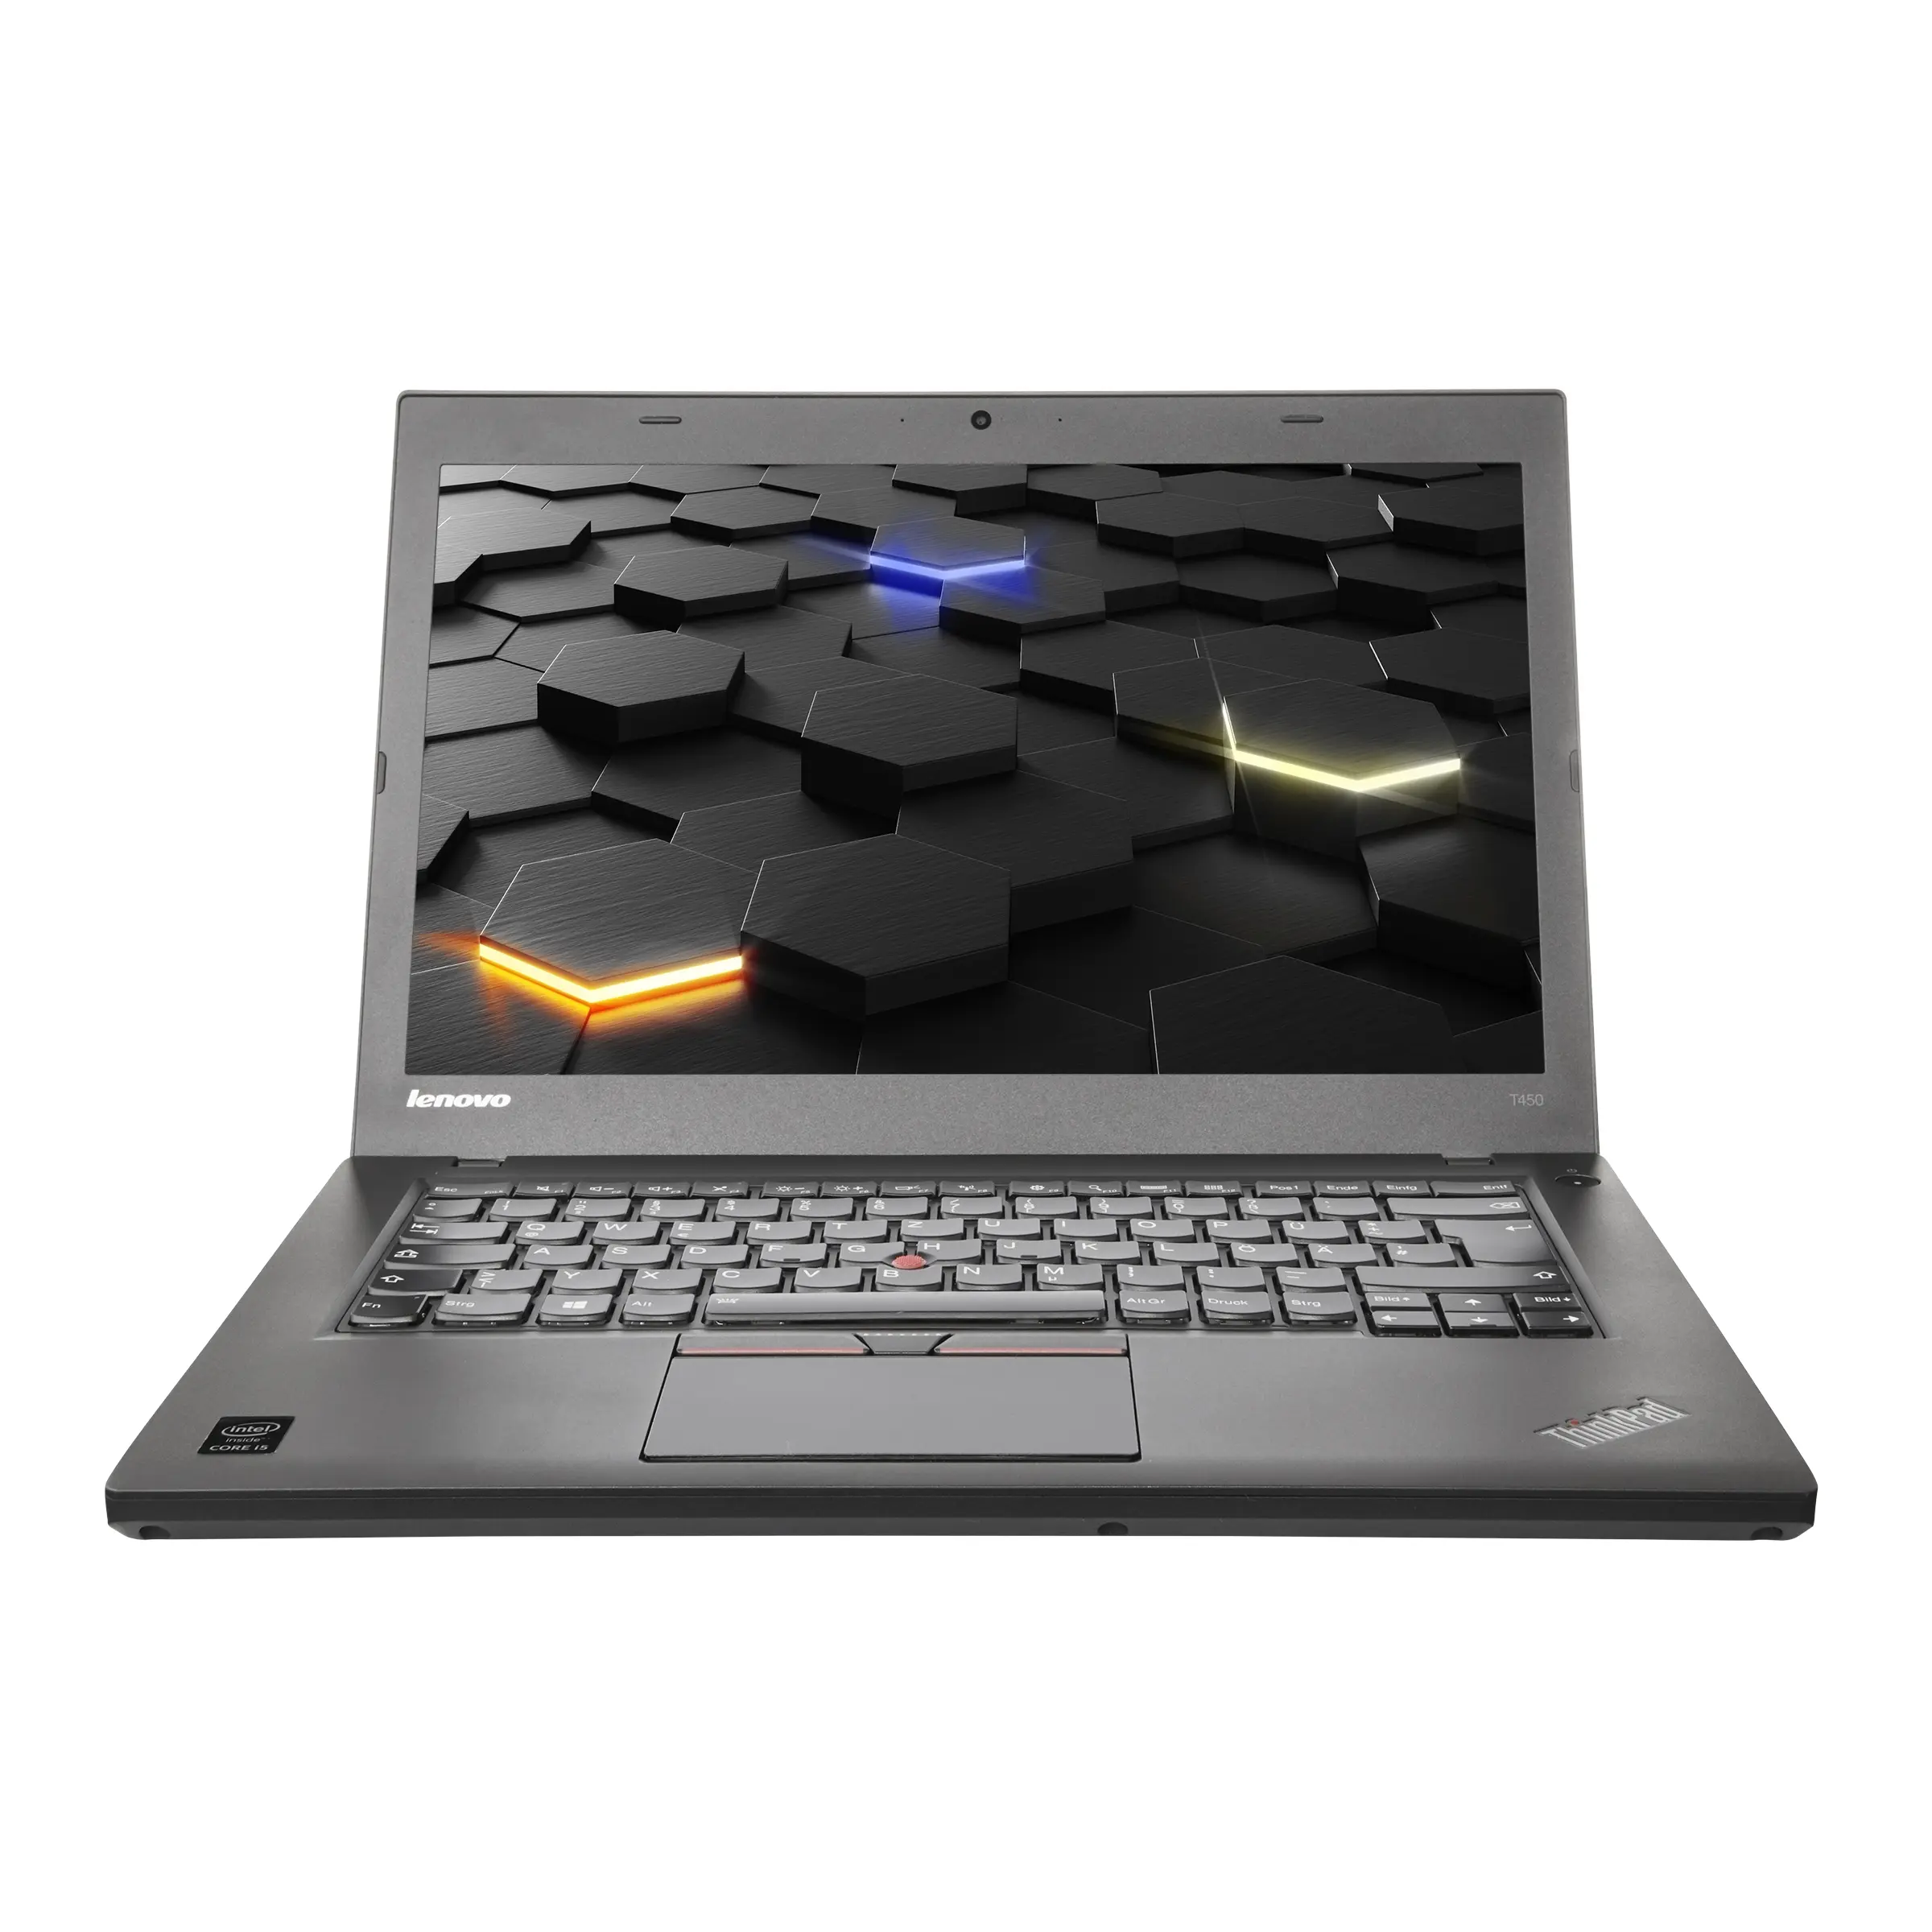 Lenovo ThinkPad T450, i7 (5.Gen), 14 Zoll, FHD, IPS, 8GB, 250GB SSD, Webcam, beleuchtete Tastatur, Windows 10 Pro